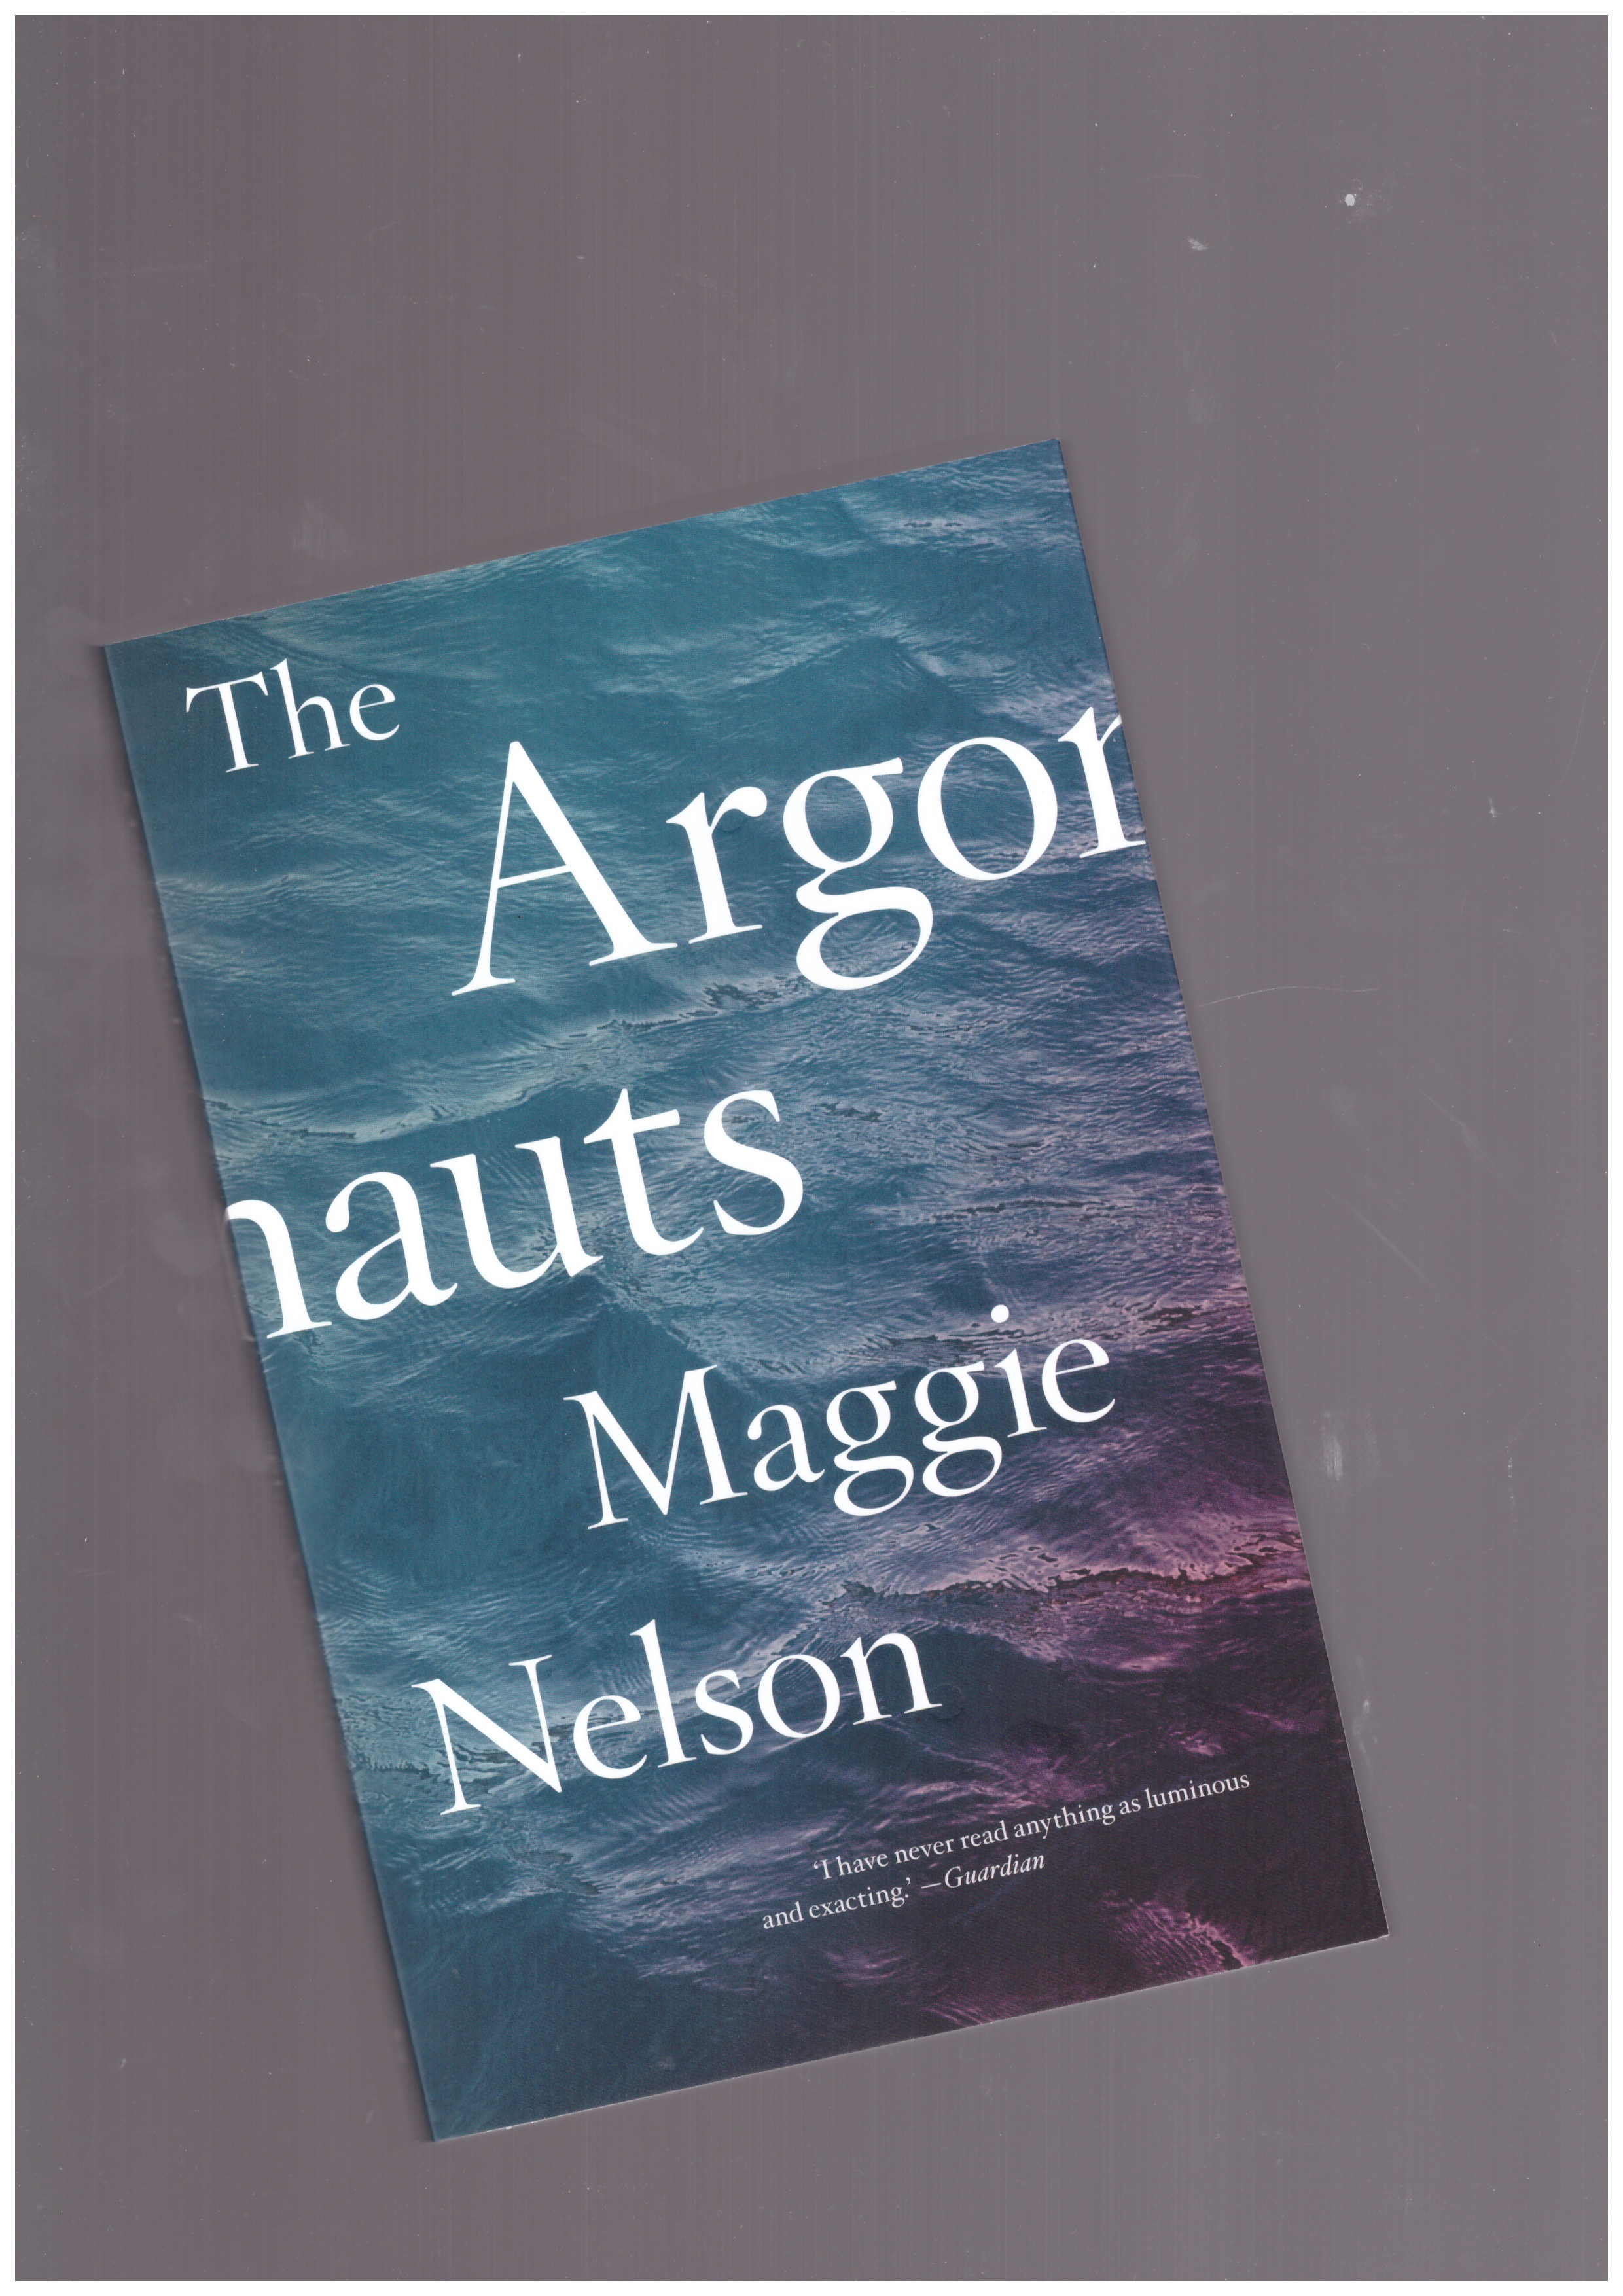 NELSON, Maggie - The Argonauts